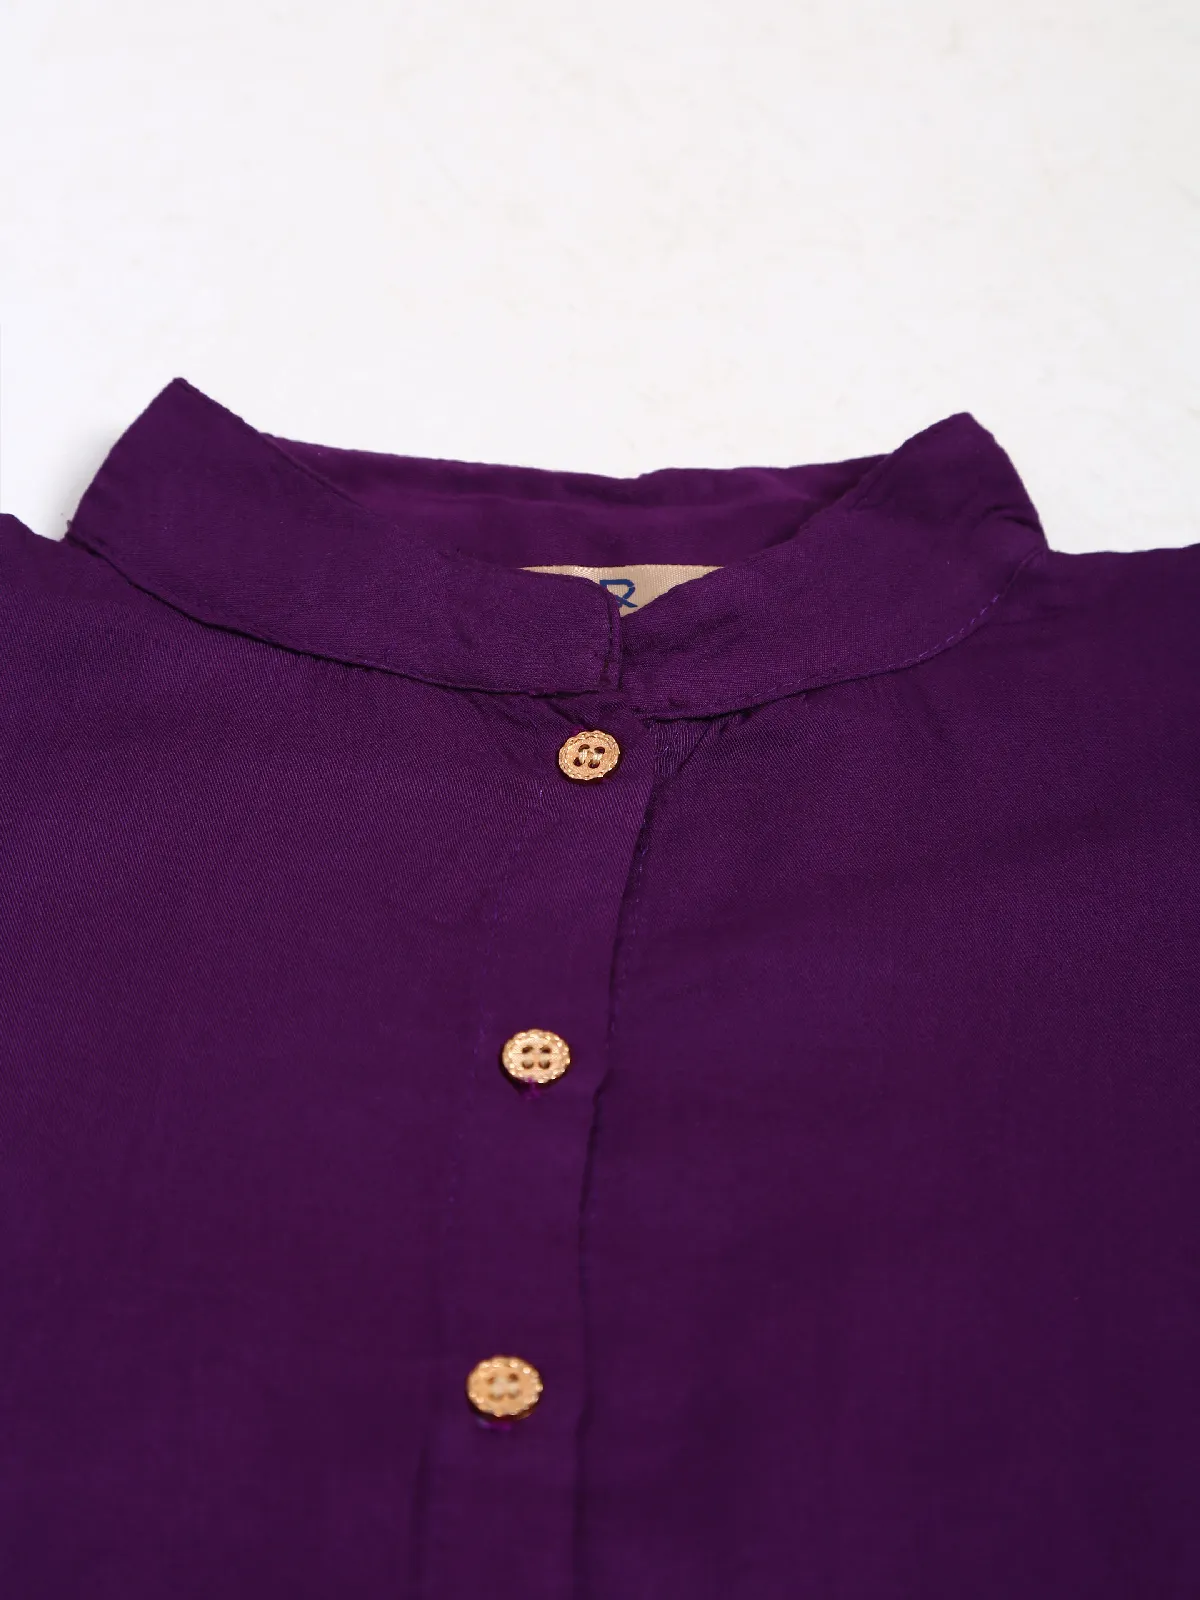 Roxy purple plain cotton top